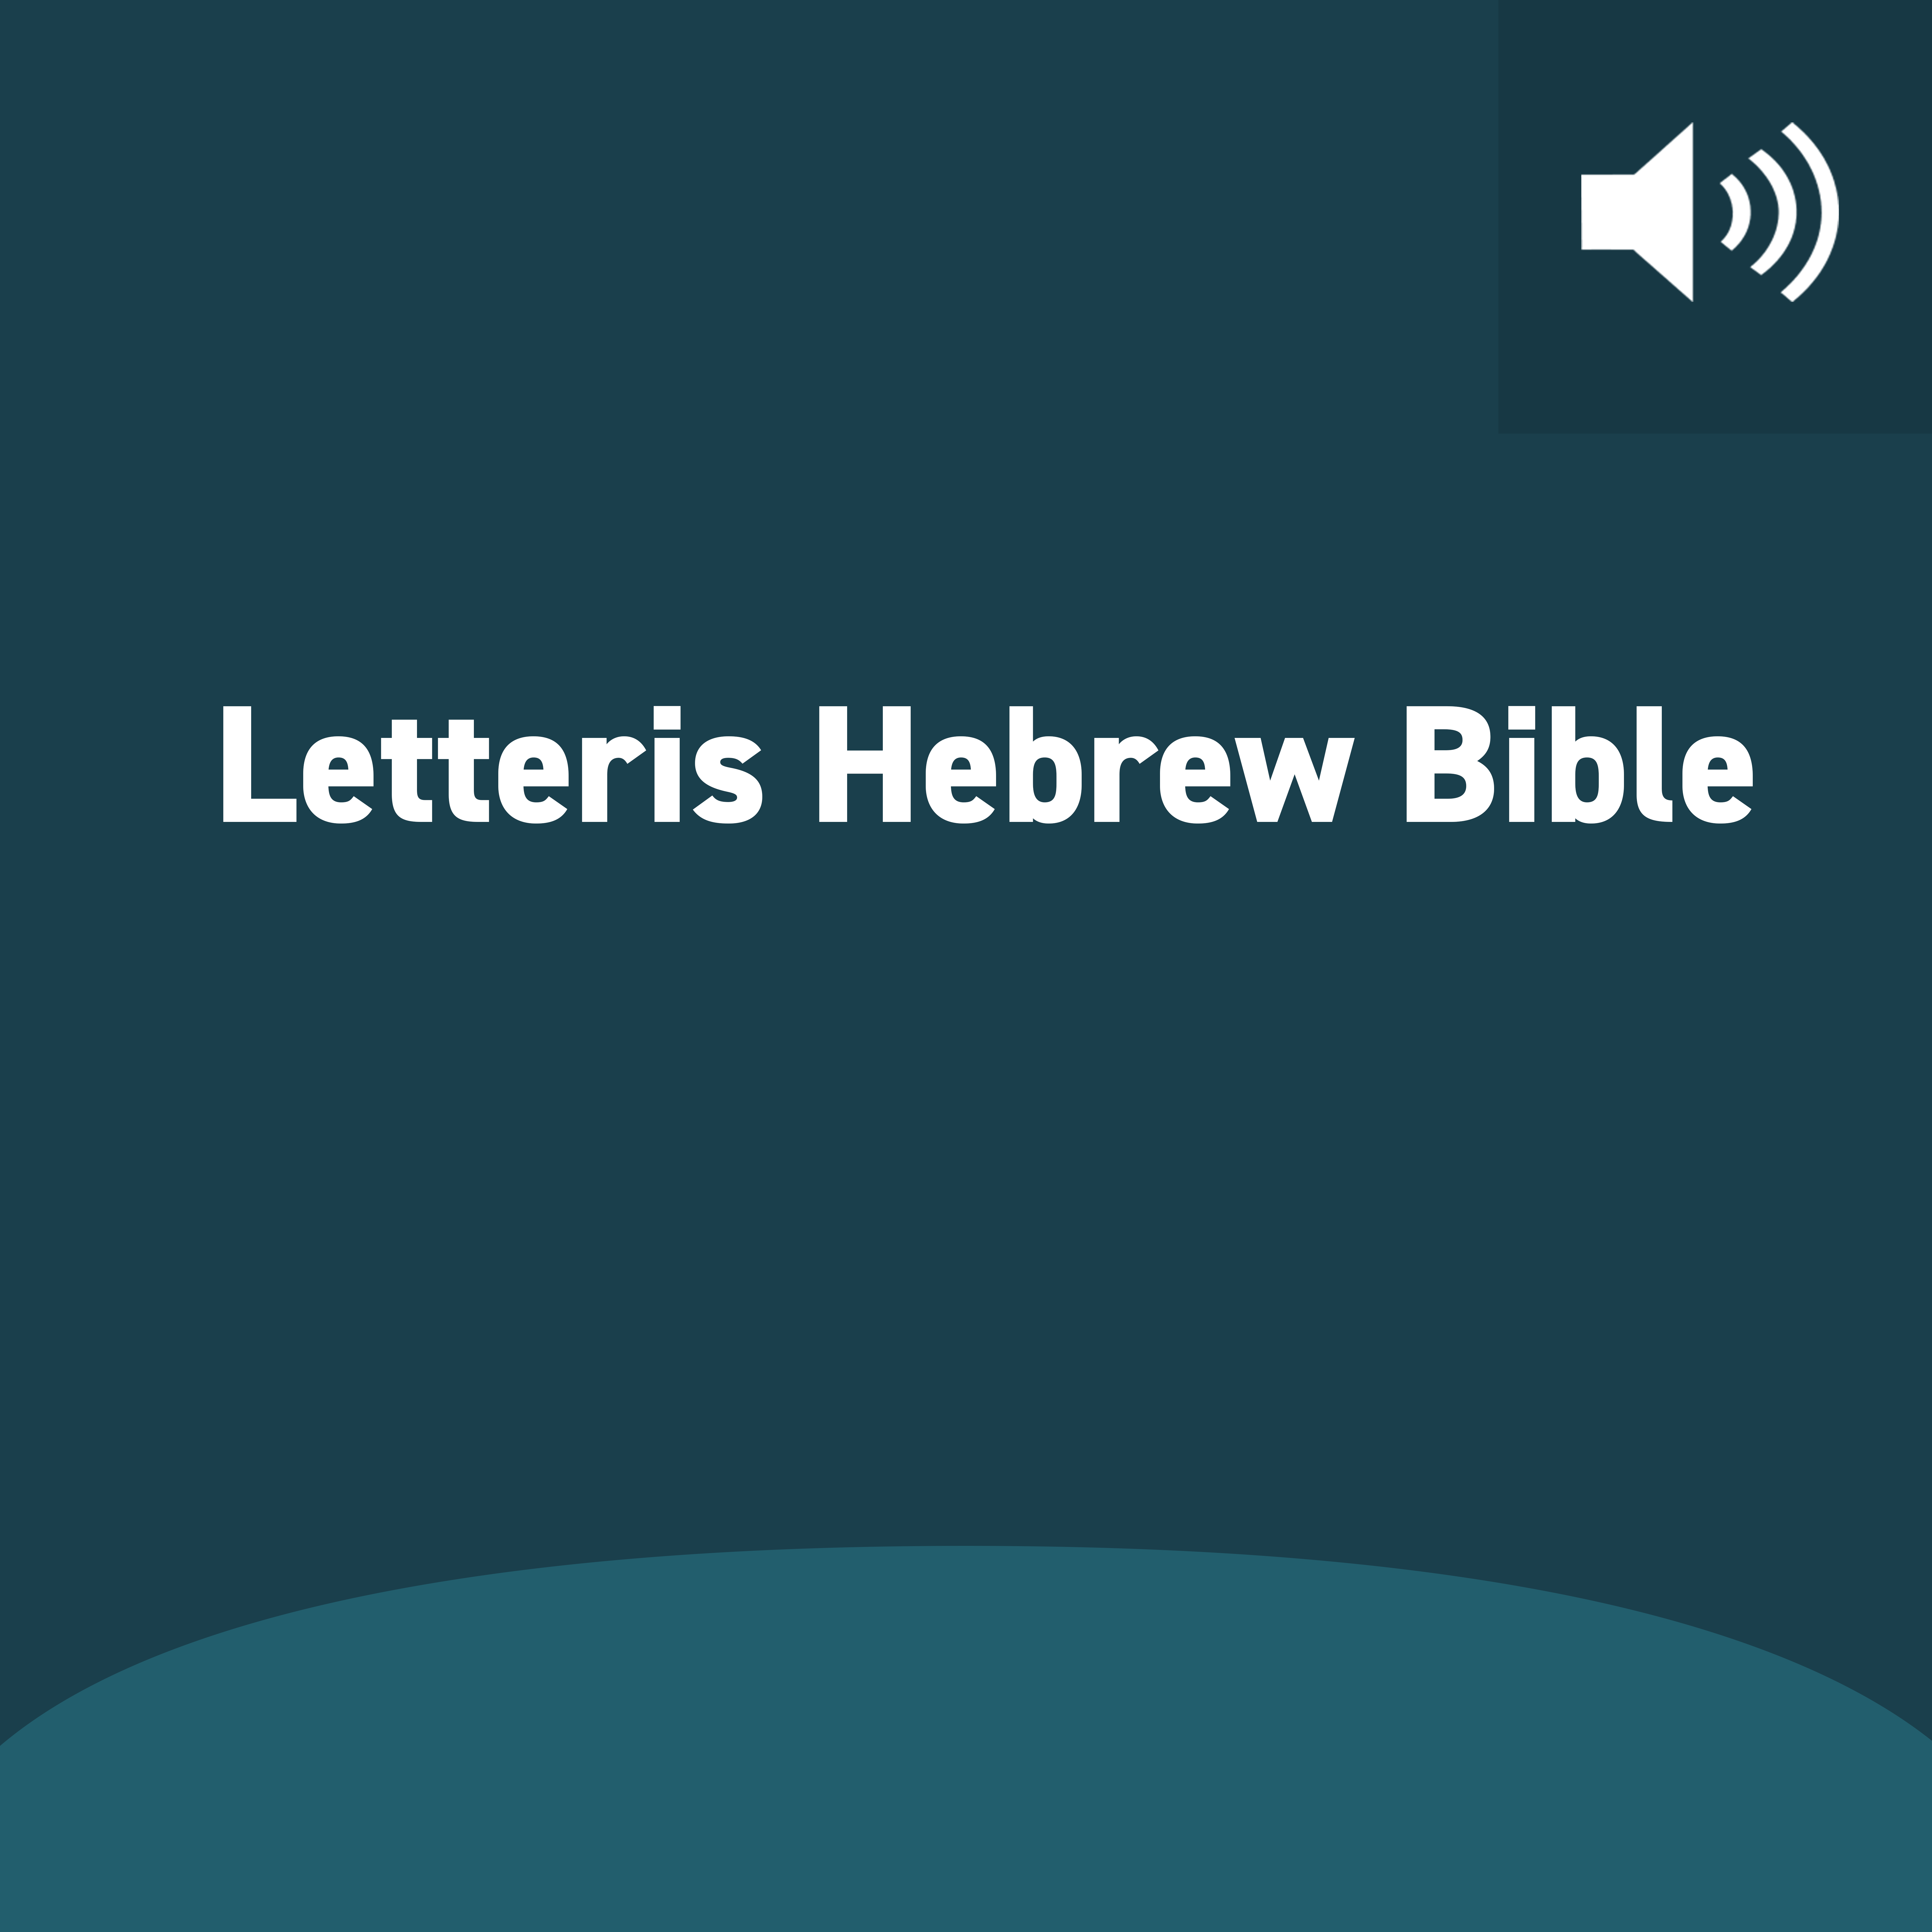 Letteris Hebrew Bible